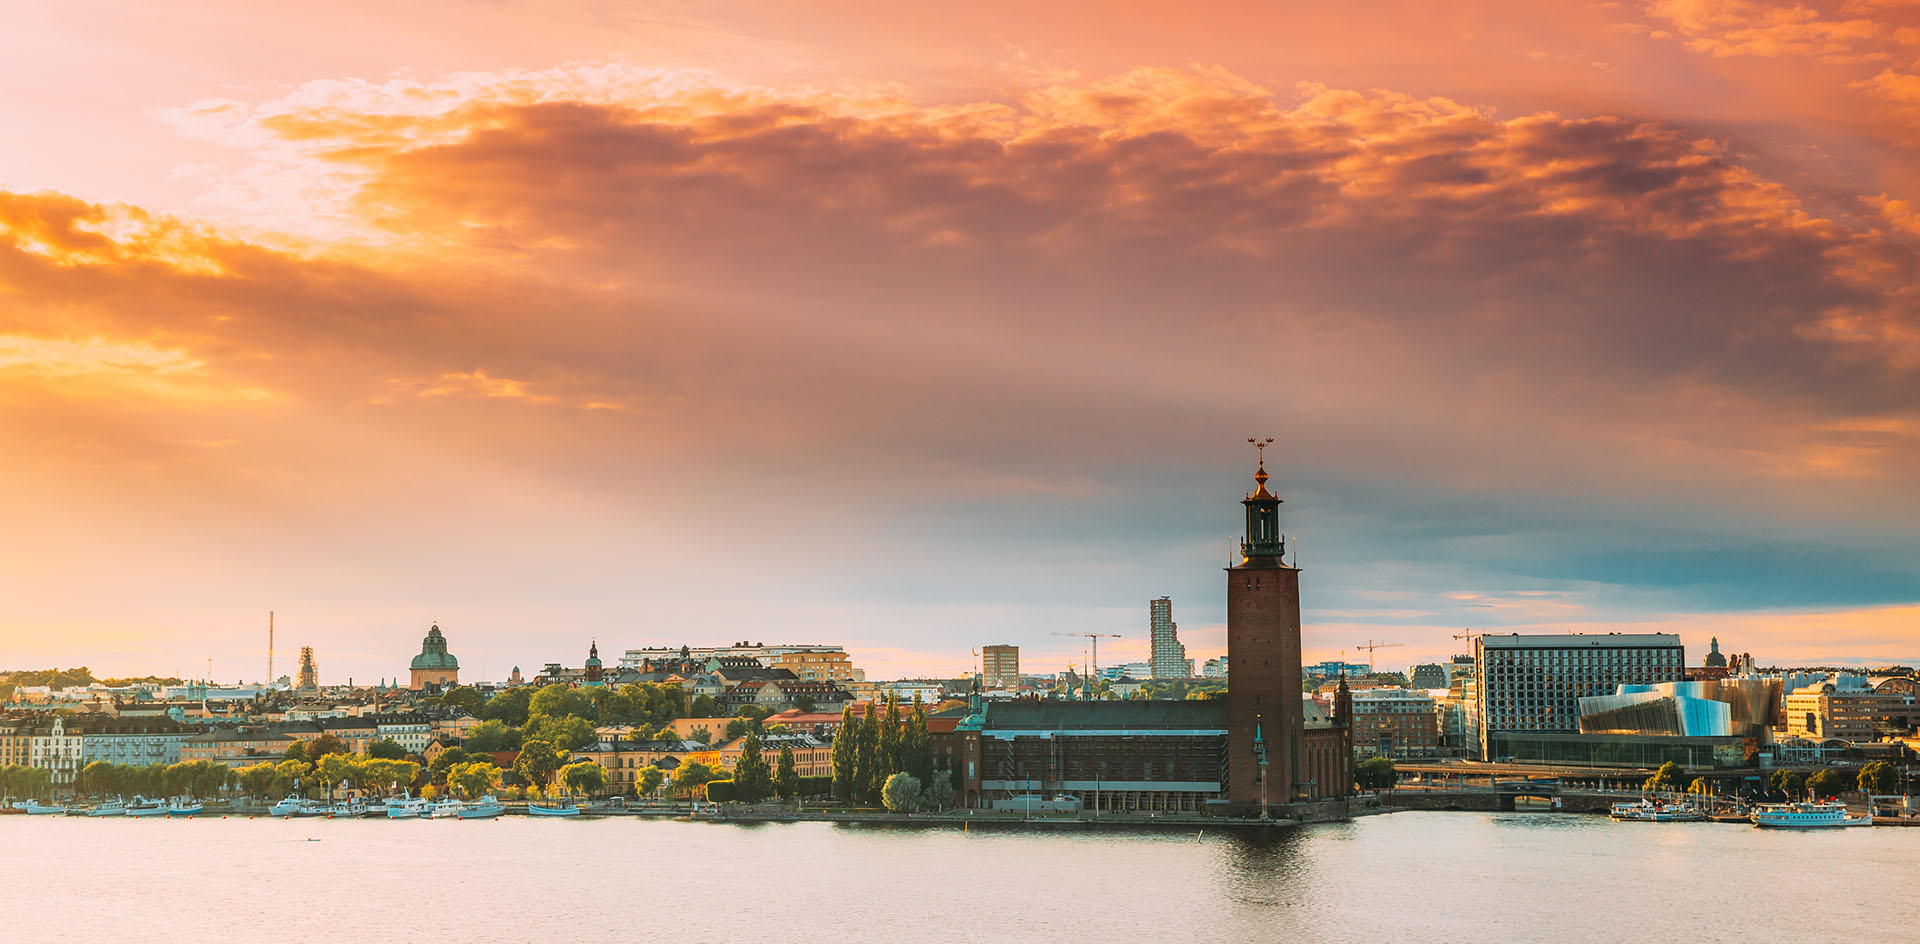 stockholm-sweden-scenic-skyline-2021-08-27-09-18-17-utc